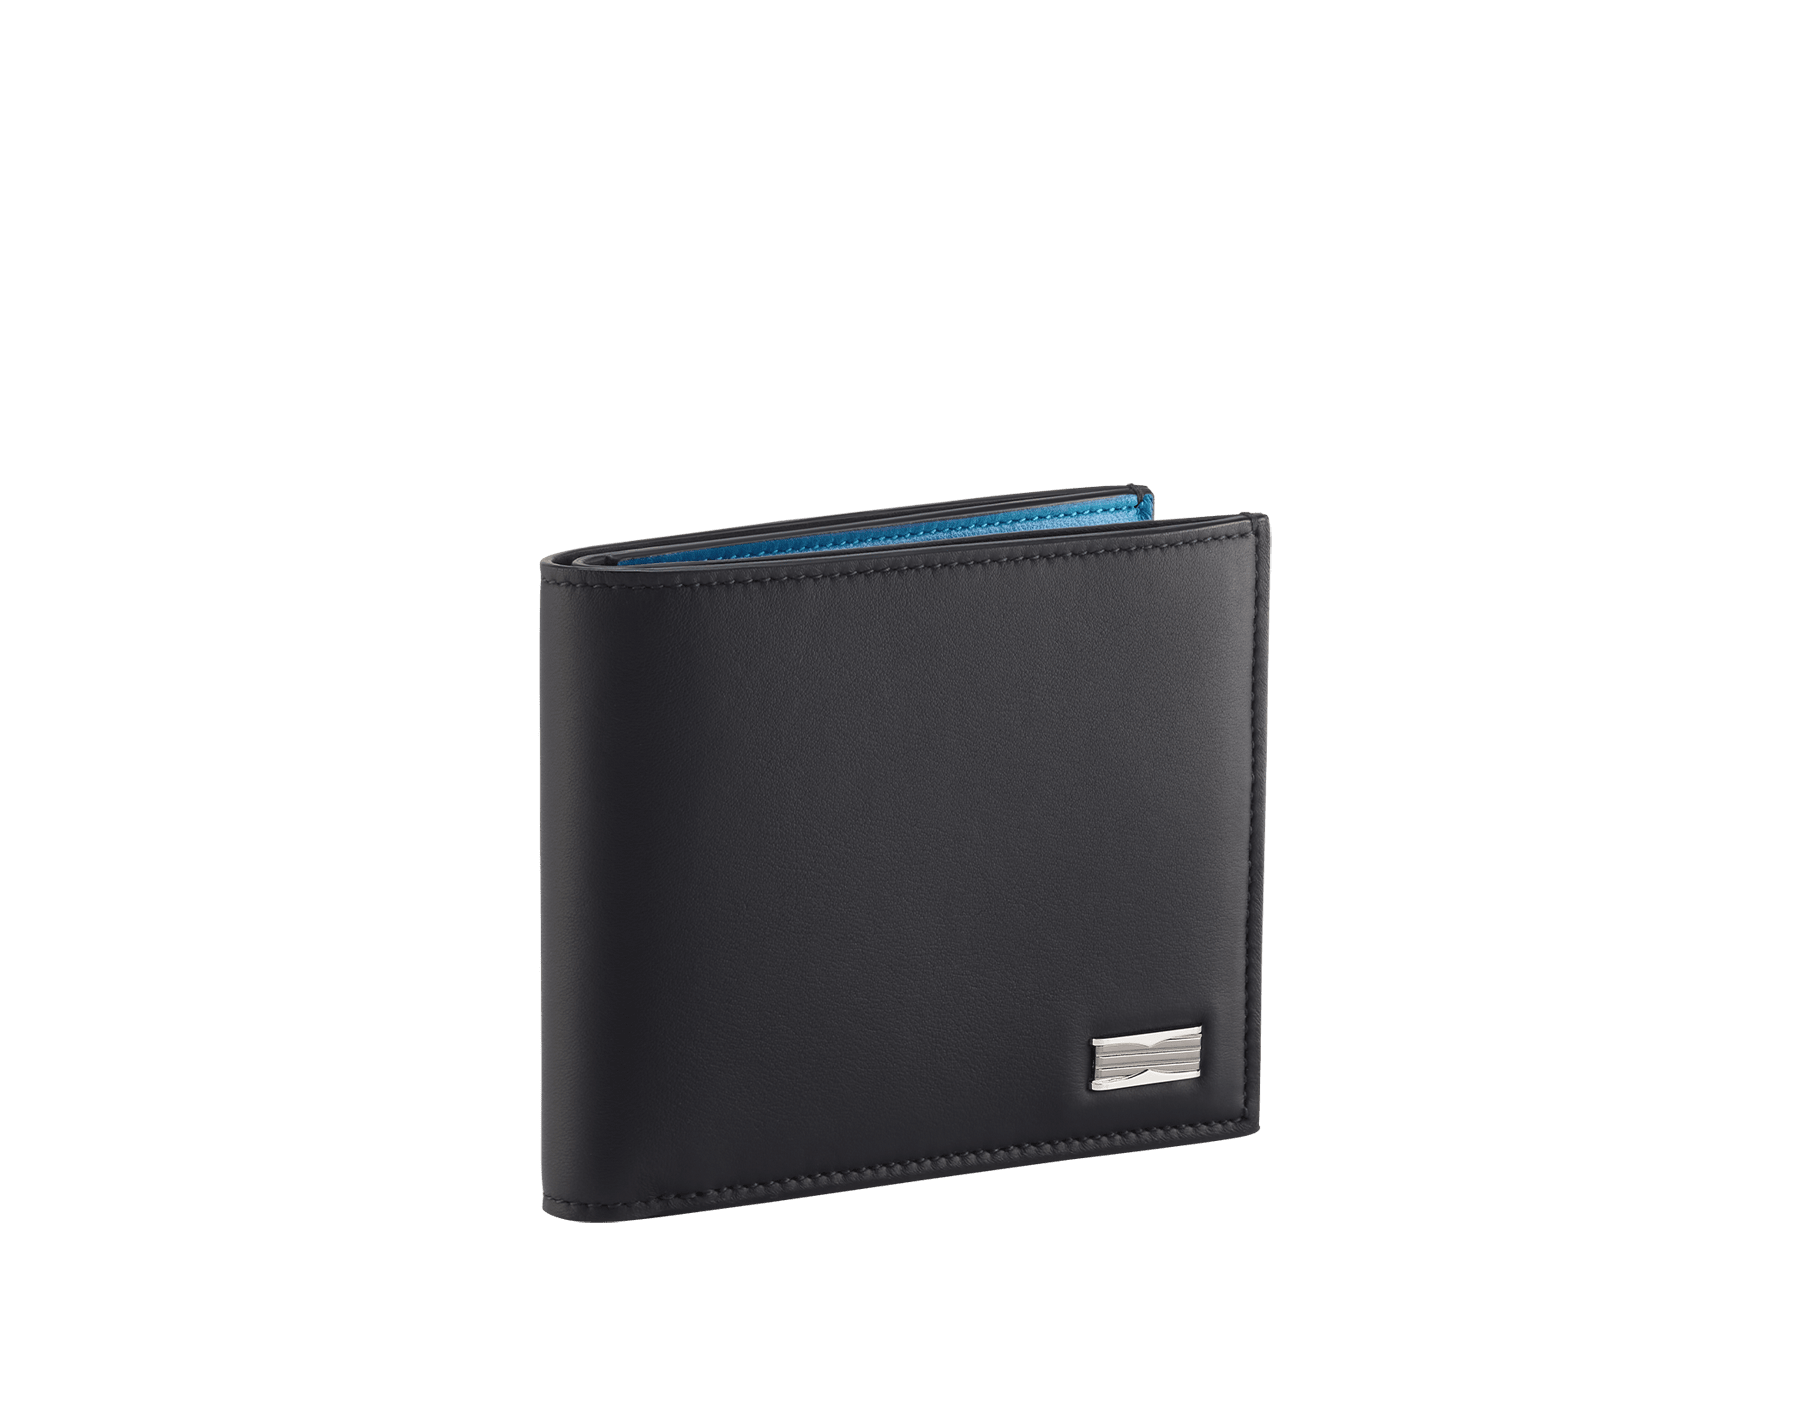 B.zero1 Man bifold wallet in black matt calf leather with niagara sapphire blue nappa leather interior. Iconic dark ruthenium and palladium-plated brass embellishment, and folded closure. BZM-BIFOLDWALLET image 1